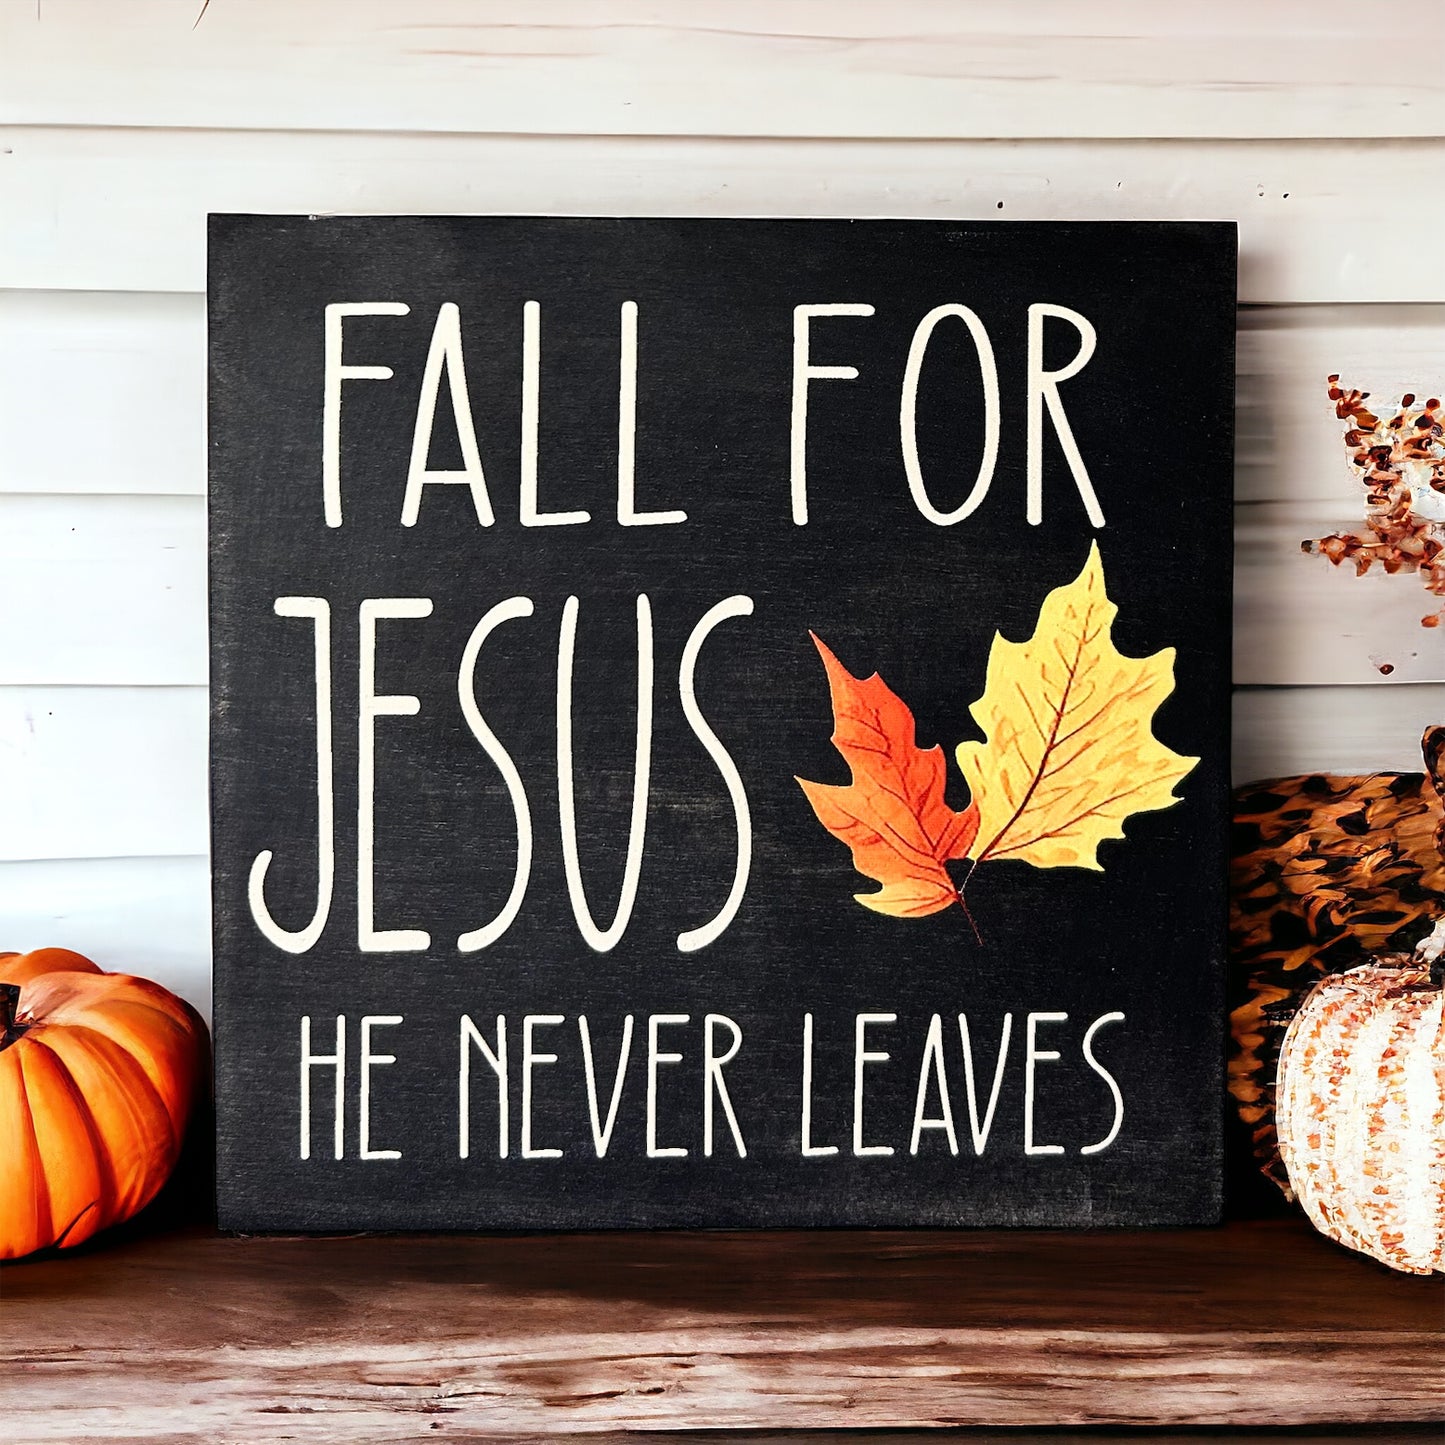 Fall for Jesus - Rustic Wood Shelf Sitter